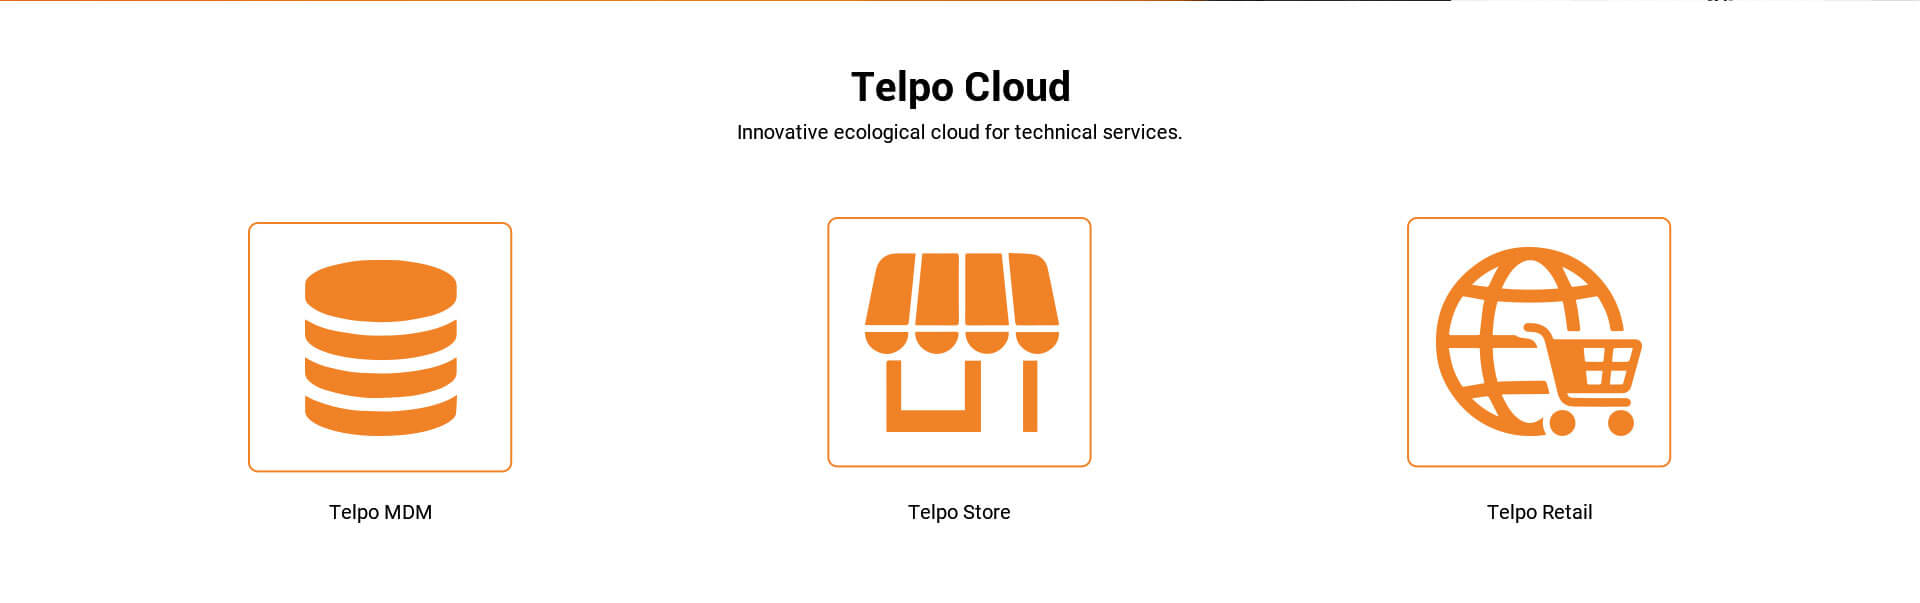 Destop pos with Telpo Cloud platform for smart reatail management and device management